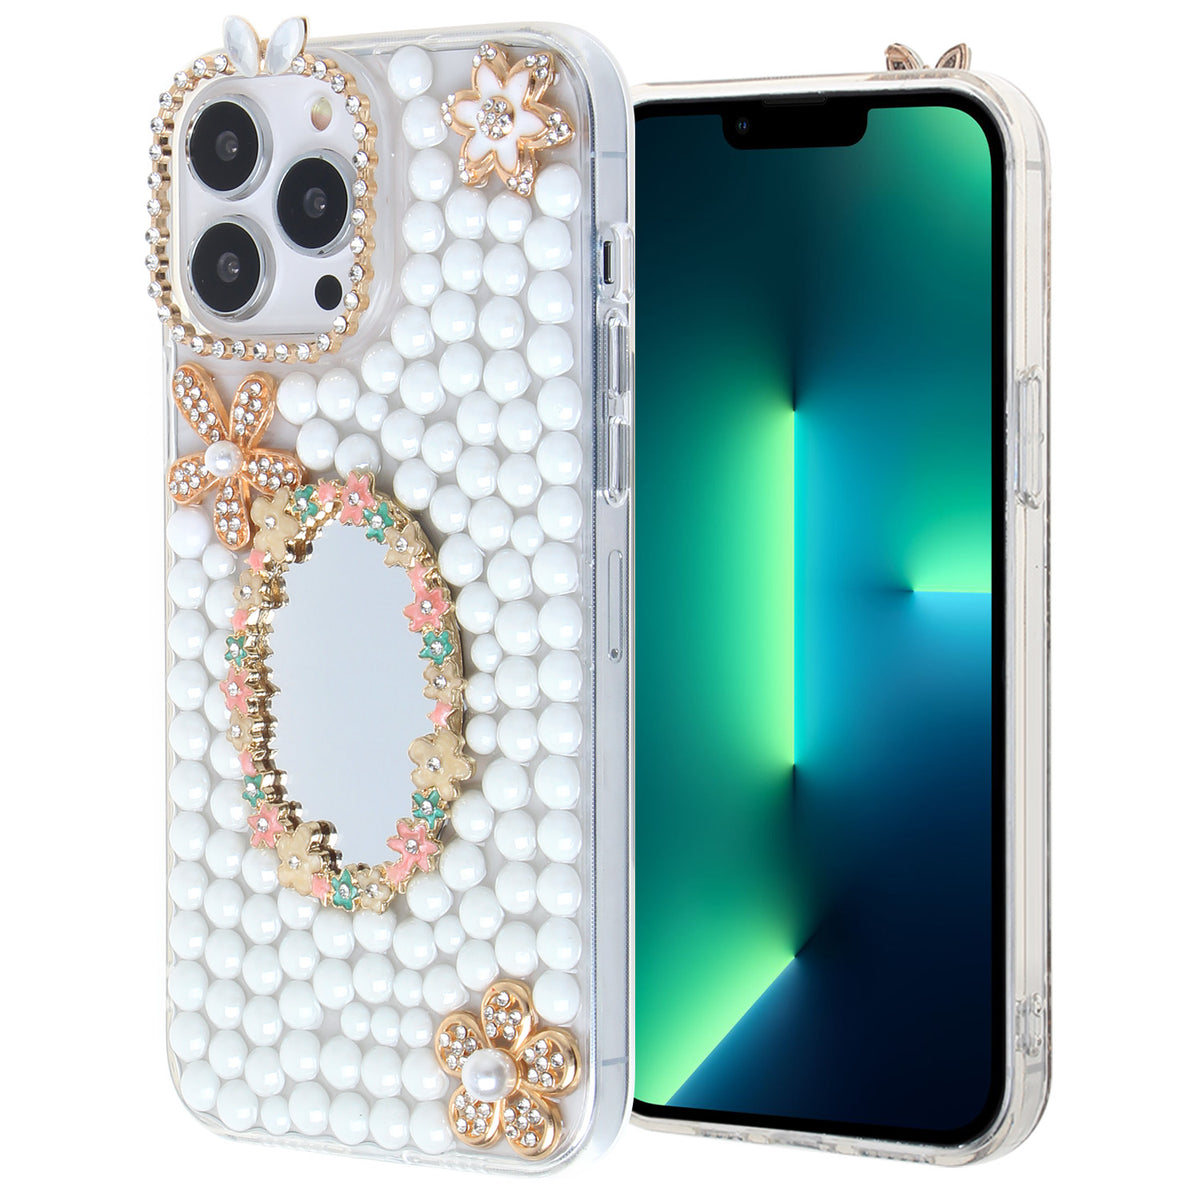 Iphone 7 / 8 / SE White Pearl Diamond Case with Mirror